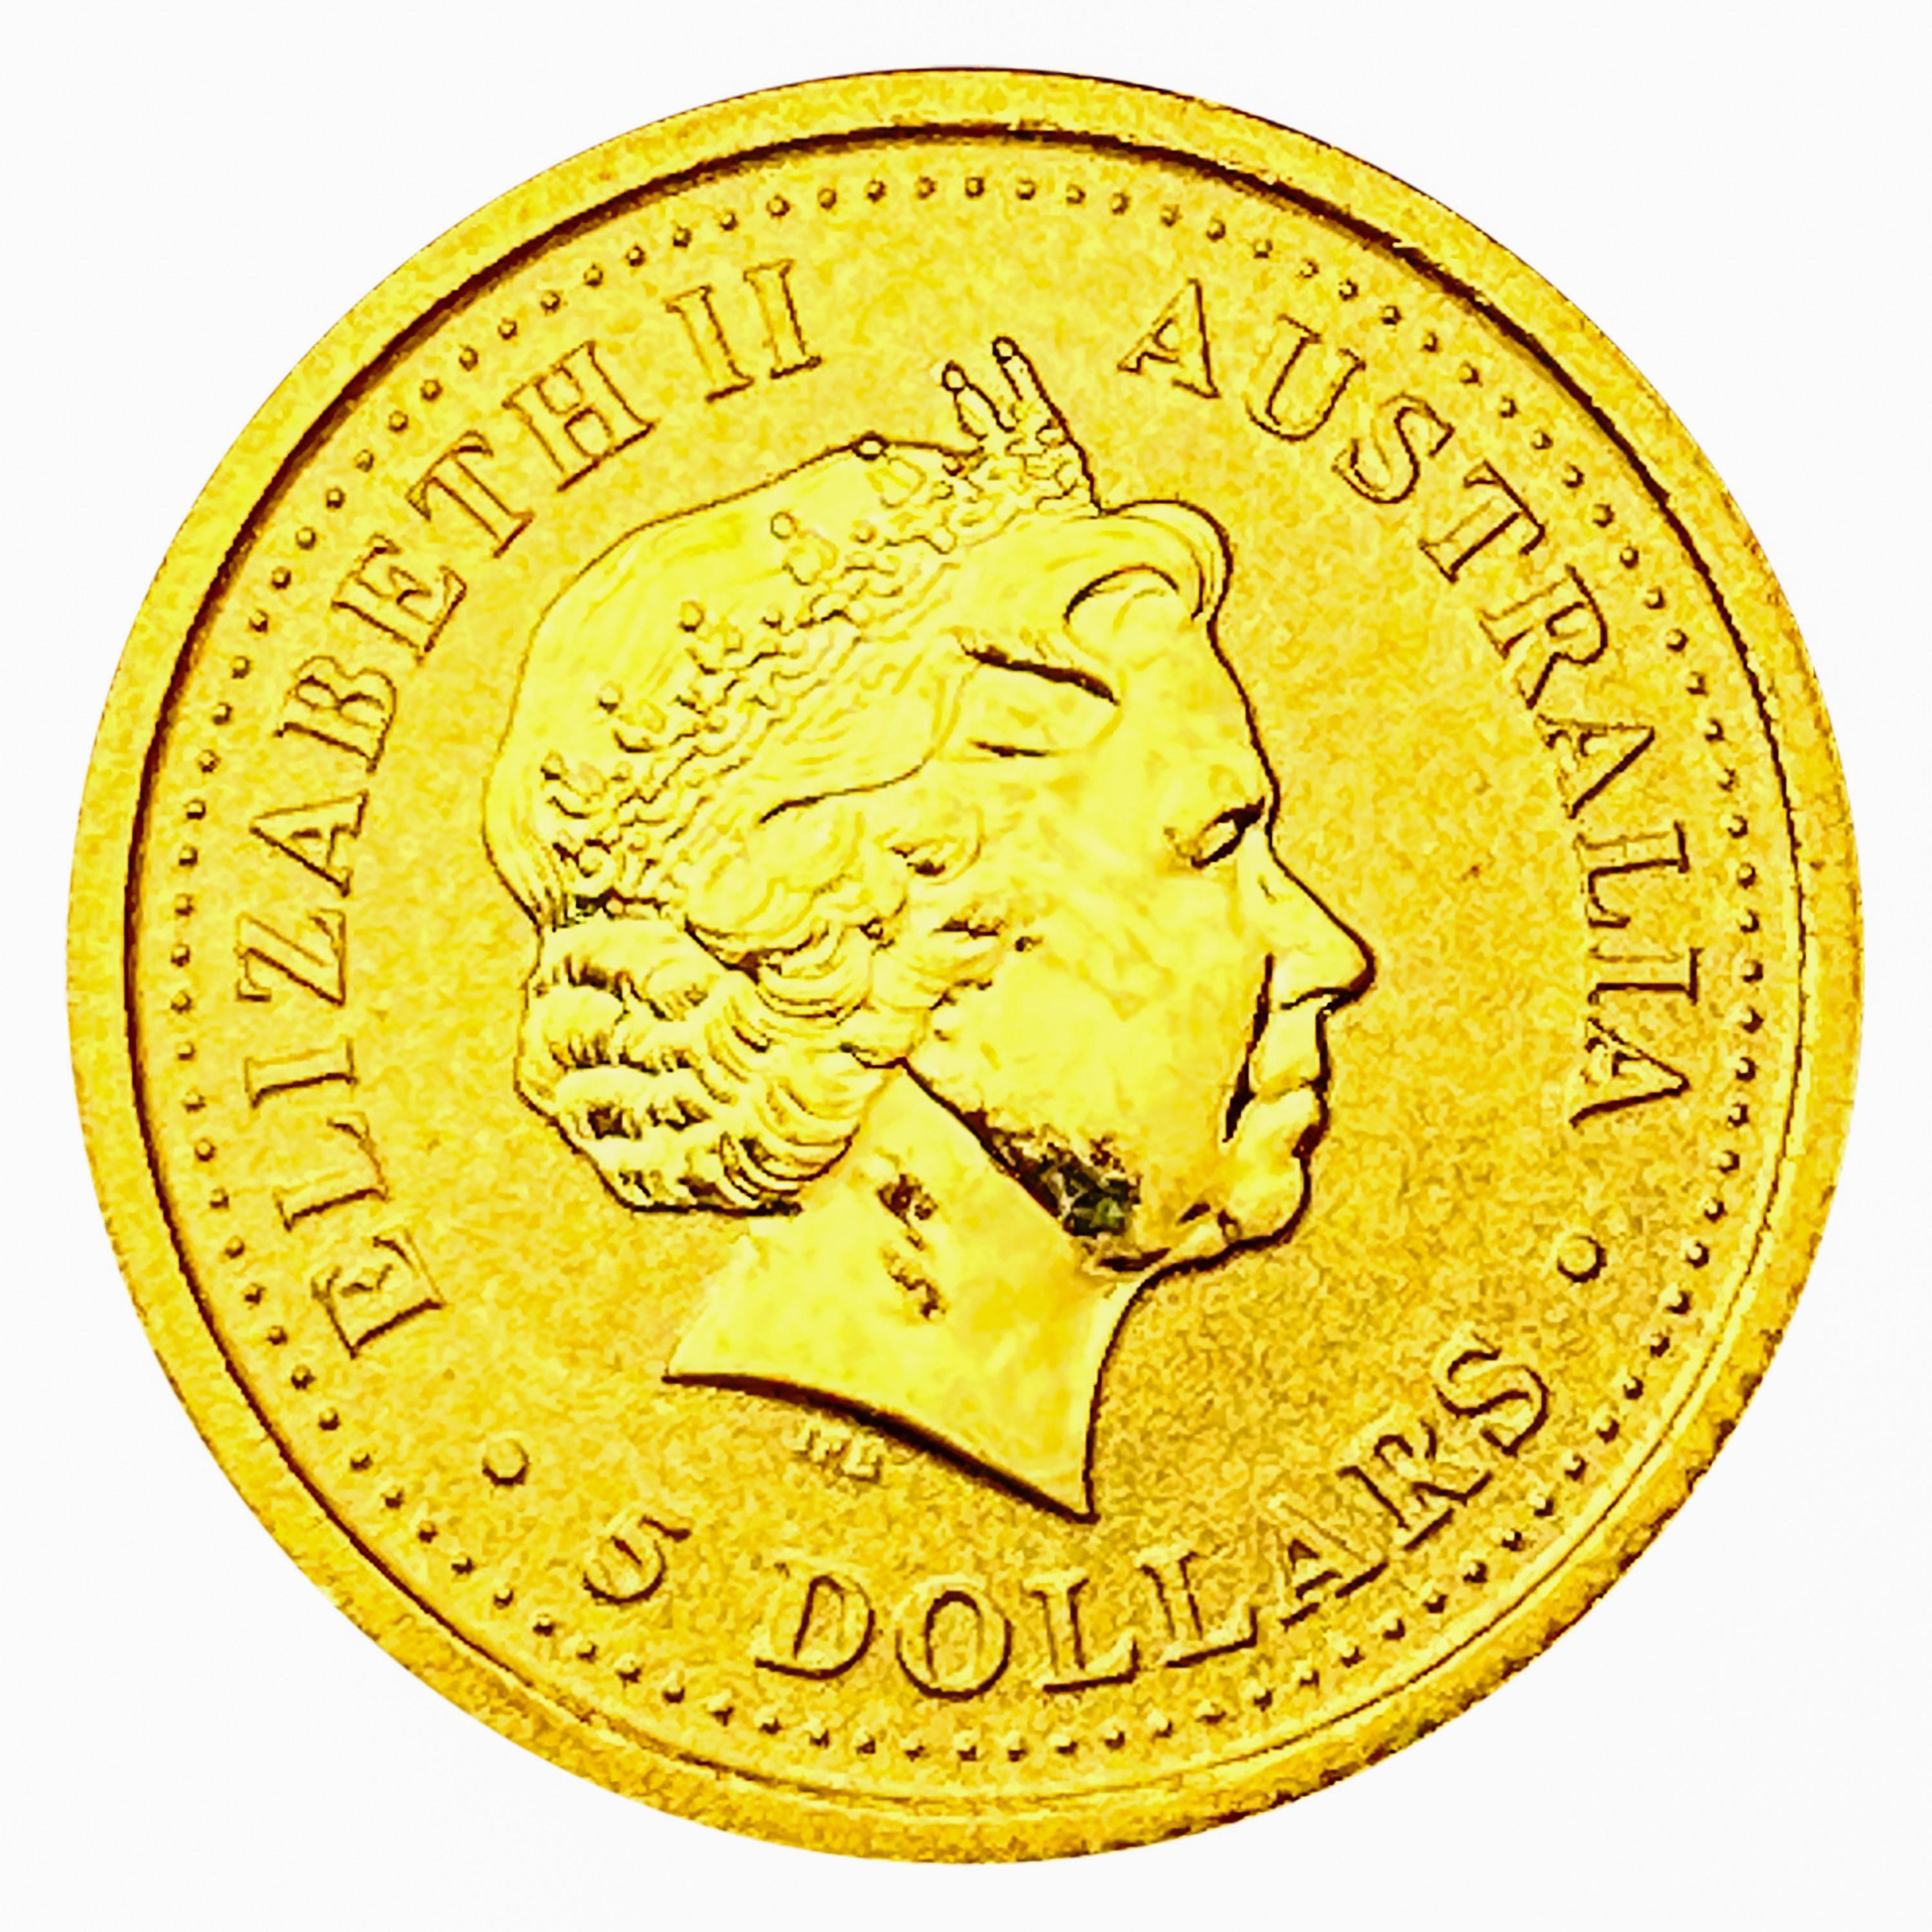 1999 Australia 1/20oz Gold $5 CHOICE PROOF